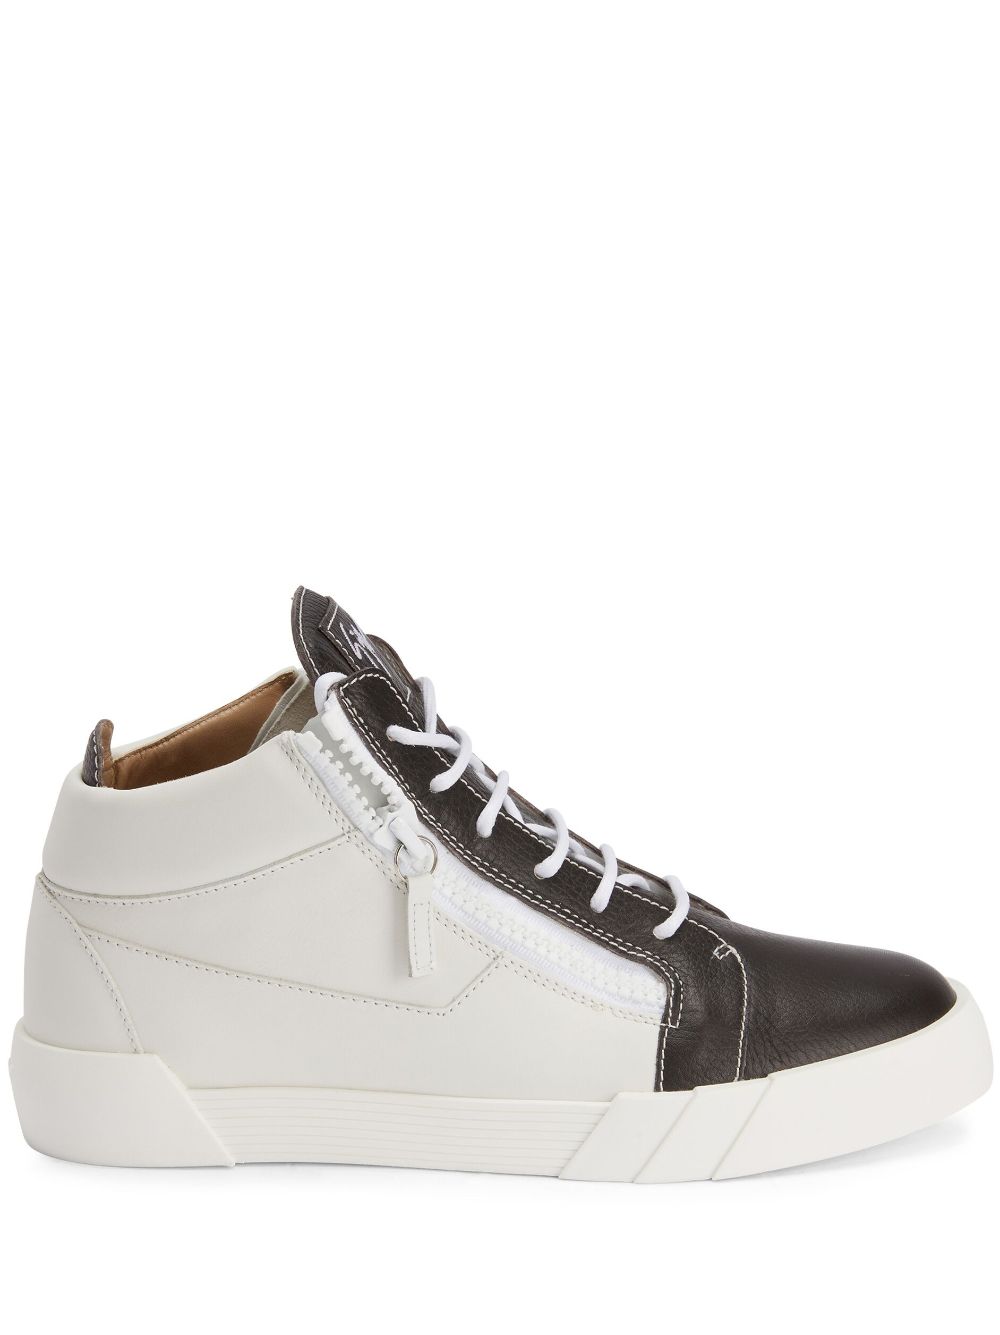 Giuseppe Zanotti Frankie colour-block Leather Sneakers - Farfetch